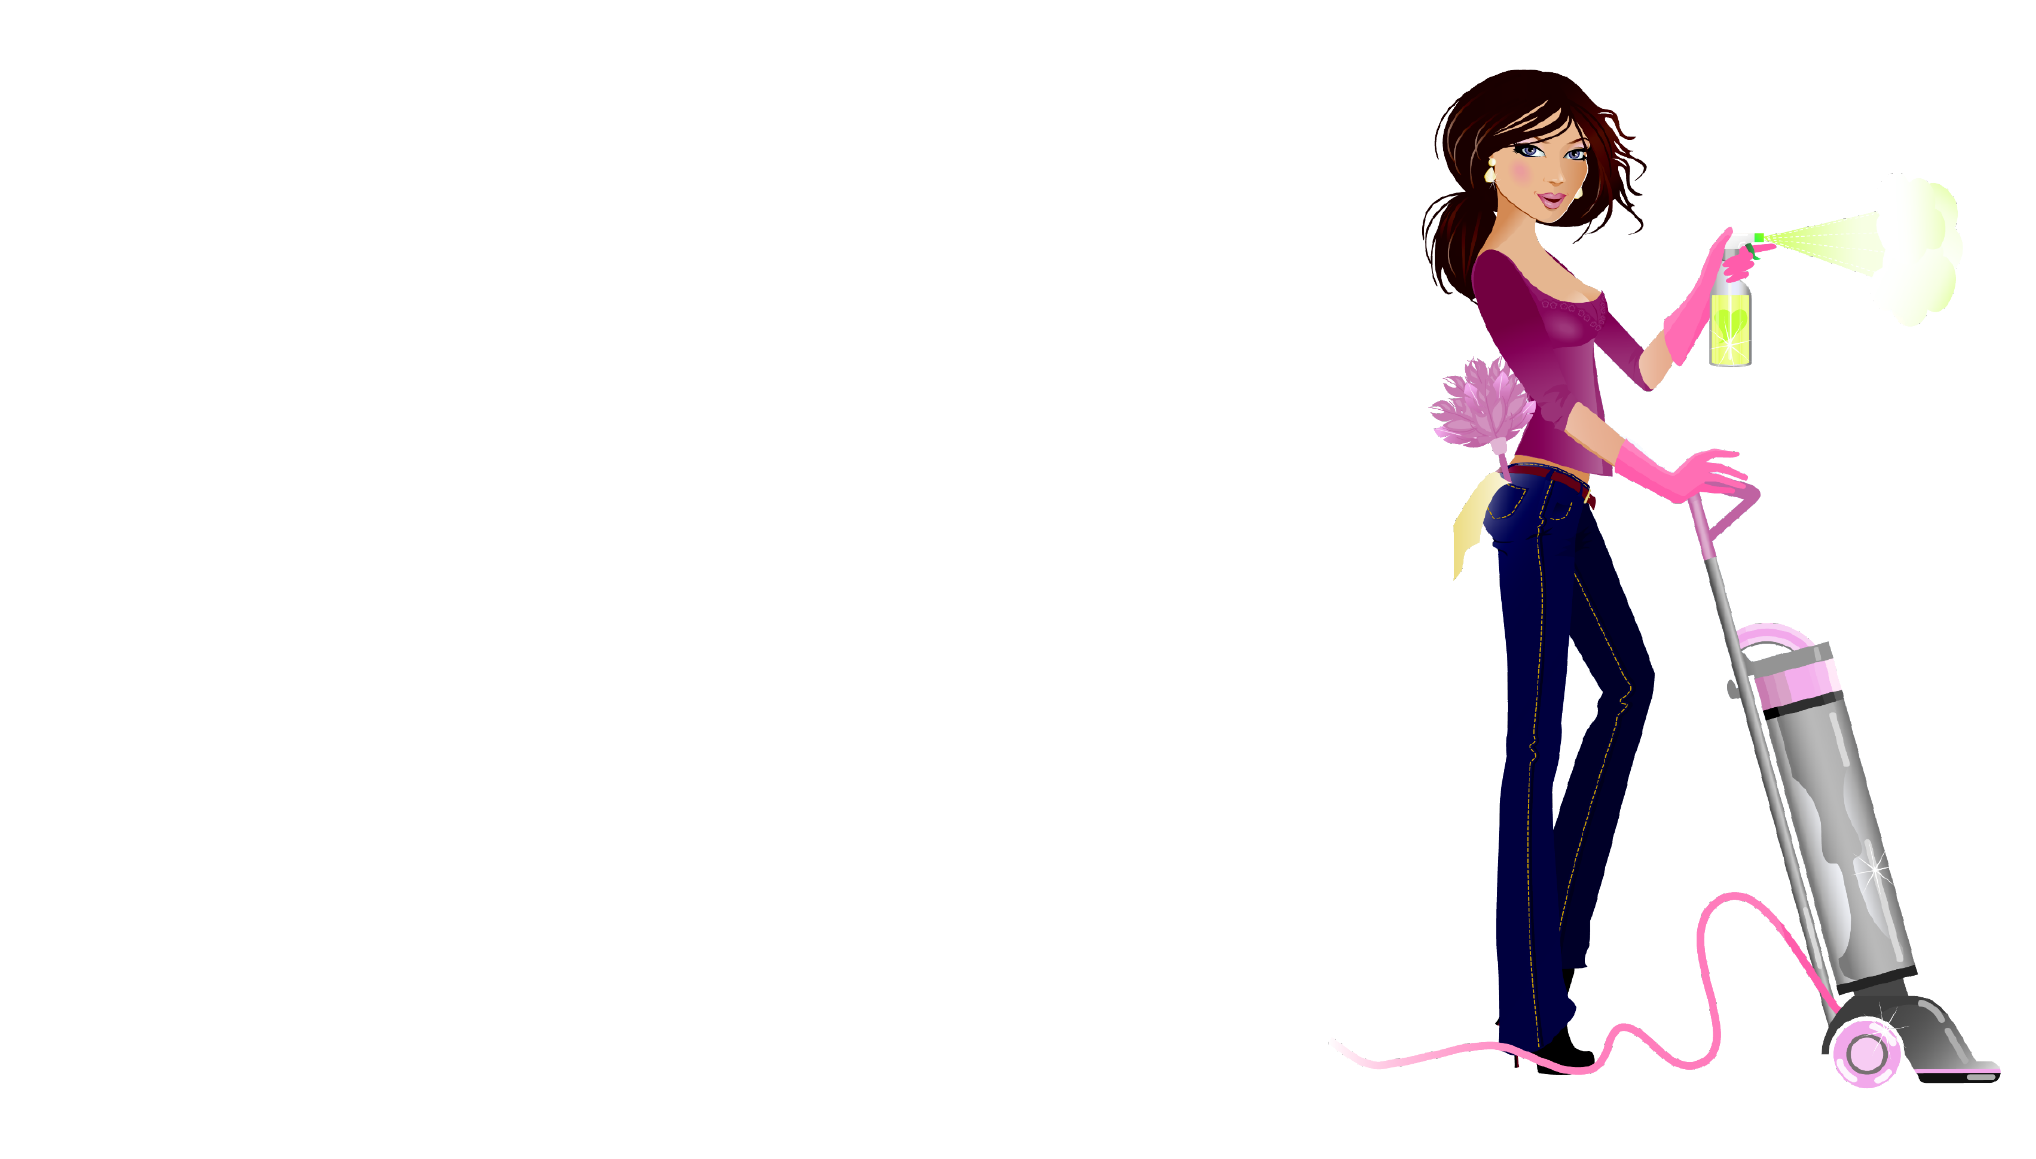 Ellis Cleaning Service